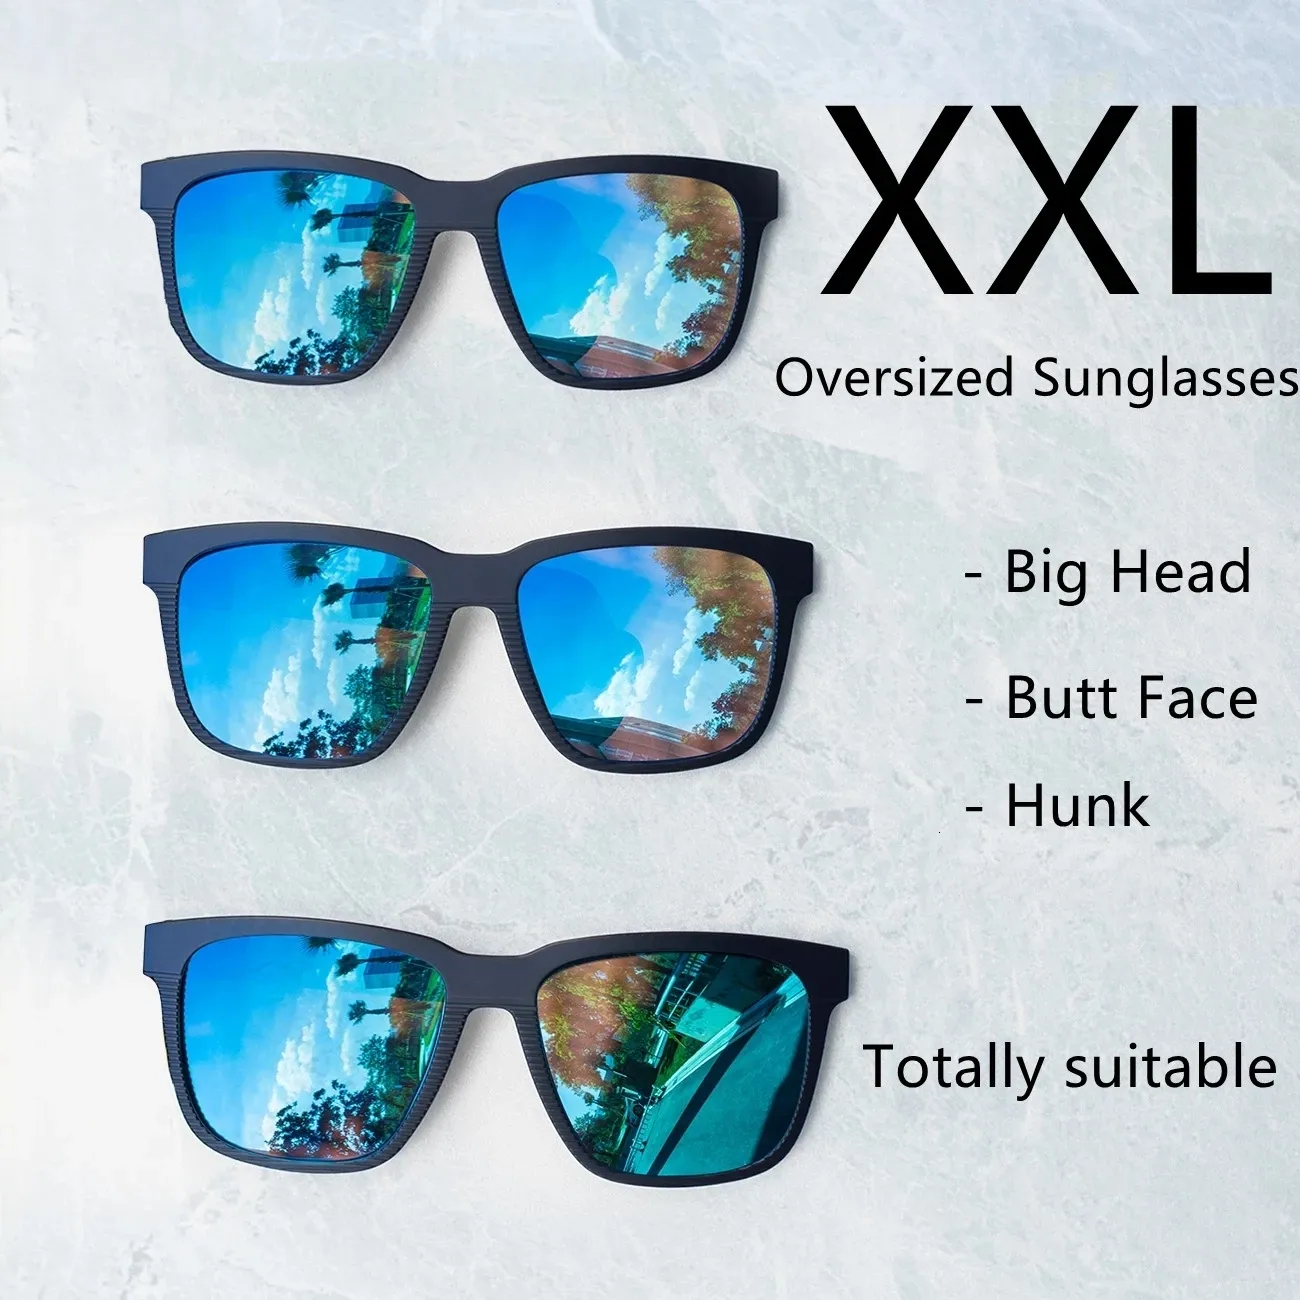 JULI Men's Polarized Sunglasses Frameless Sports Travel Driving